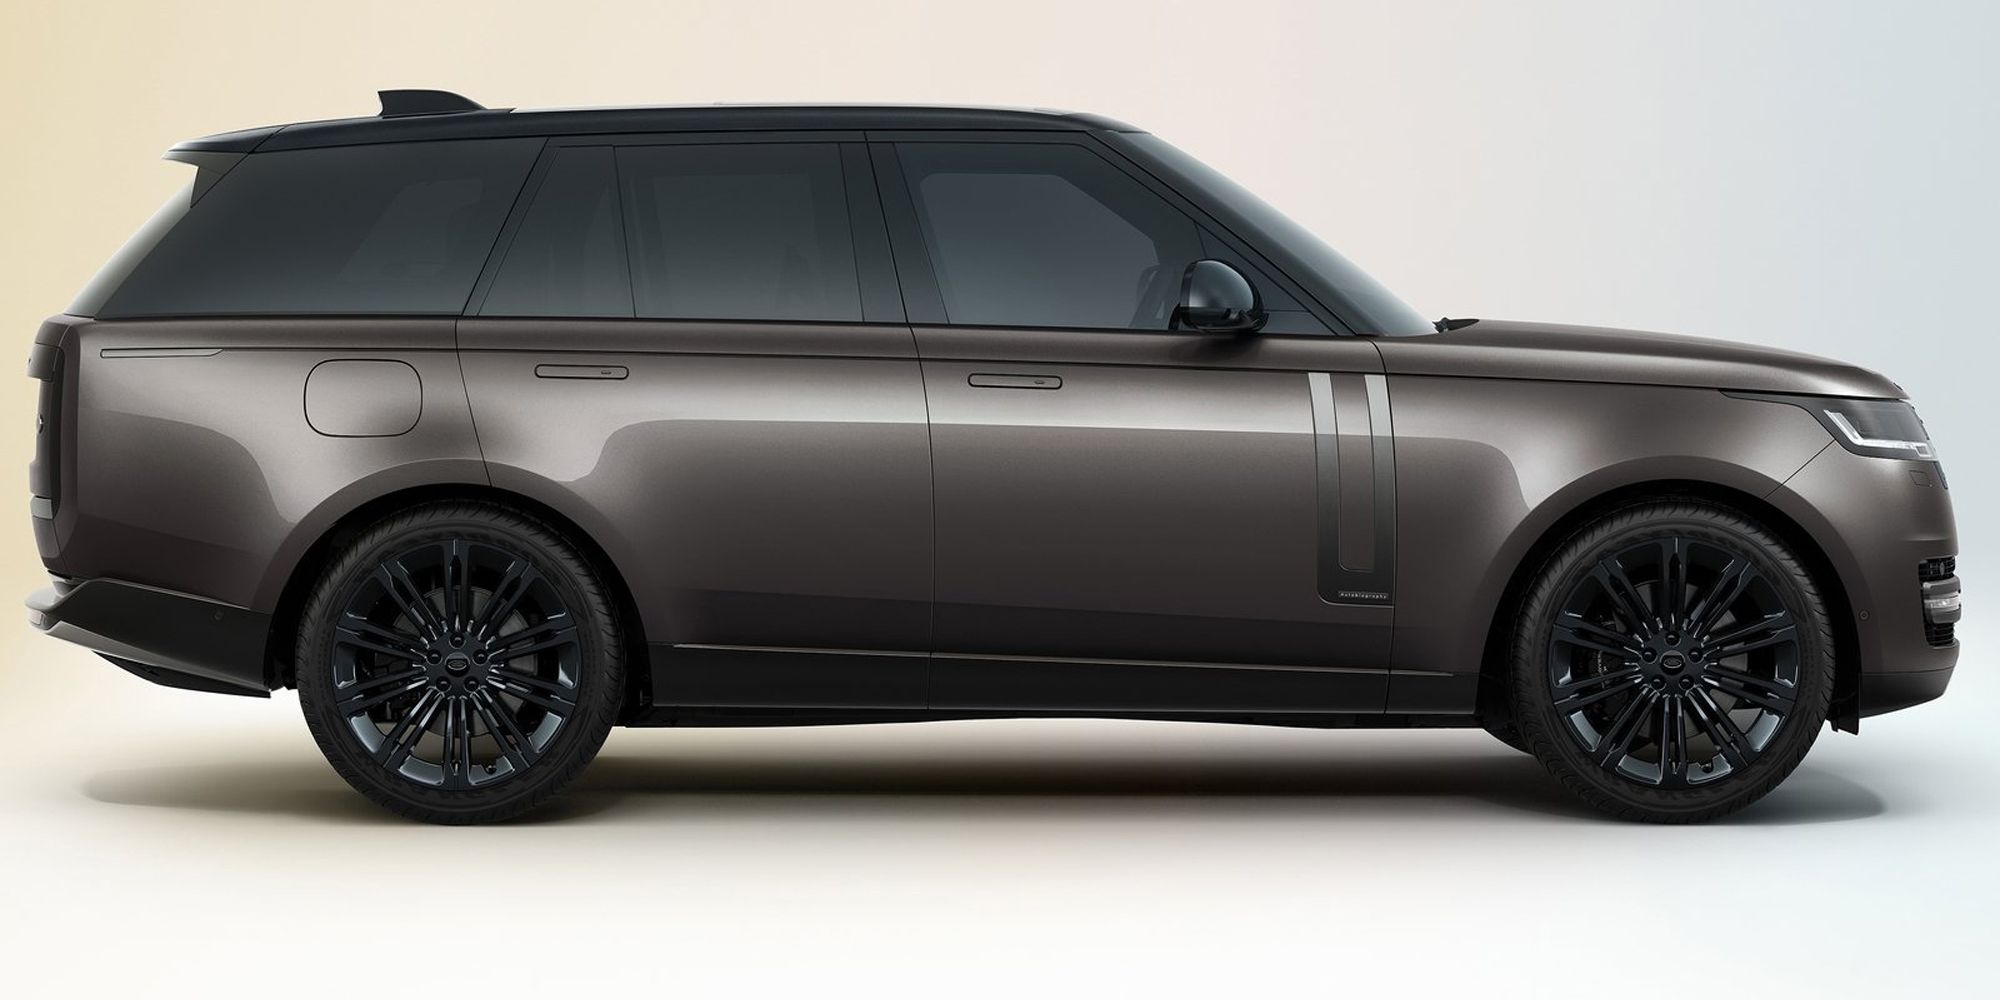 The side of a dark bronze Range Rover, studio render